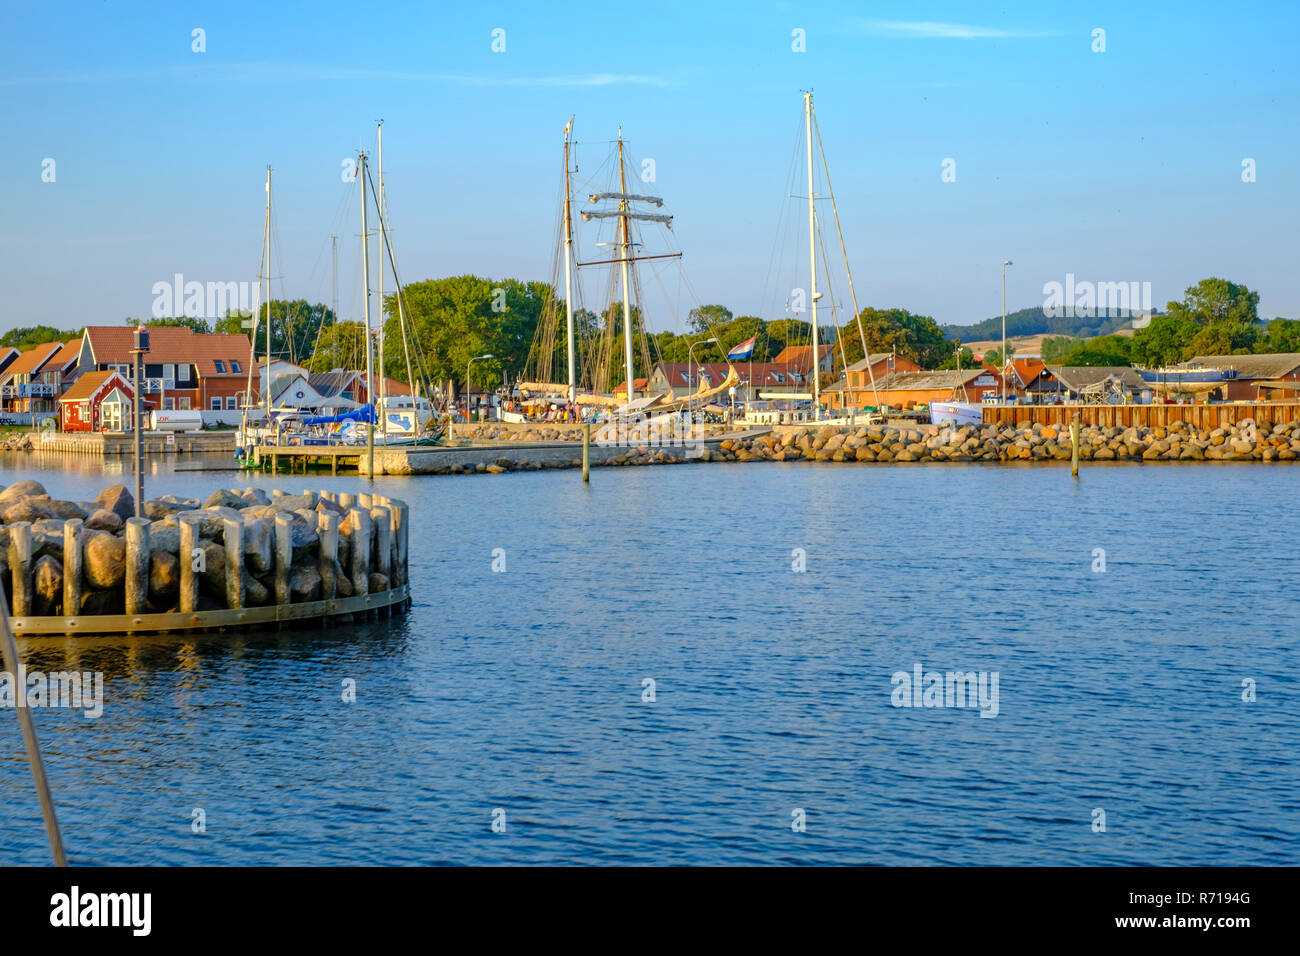 Maritime atmosphere in the port of Klinholm Havn, Moen Island, Denmark, Scandinavia, Europe. Stock Photo